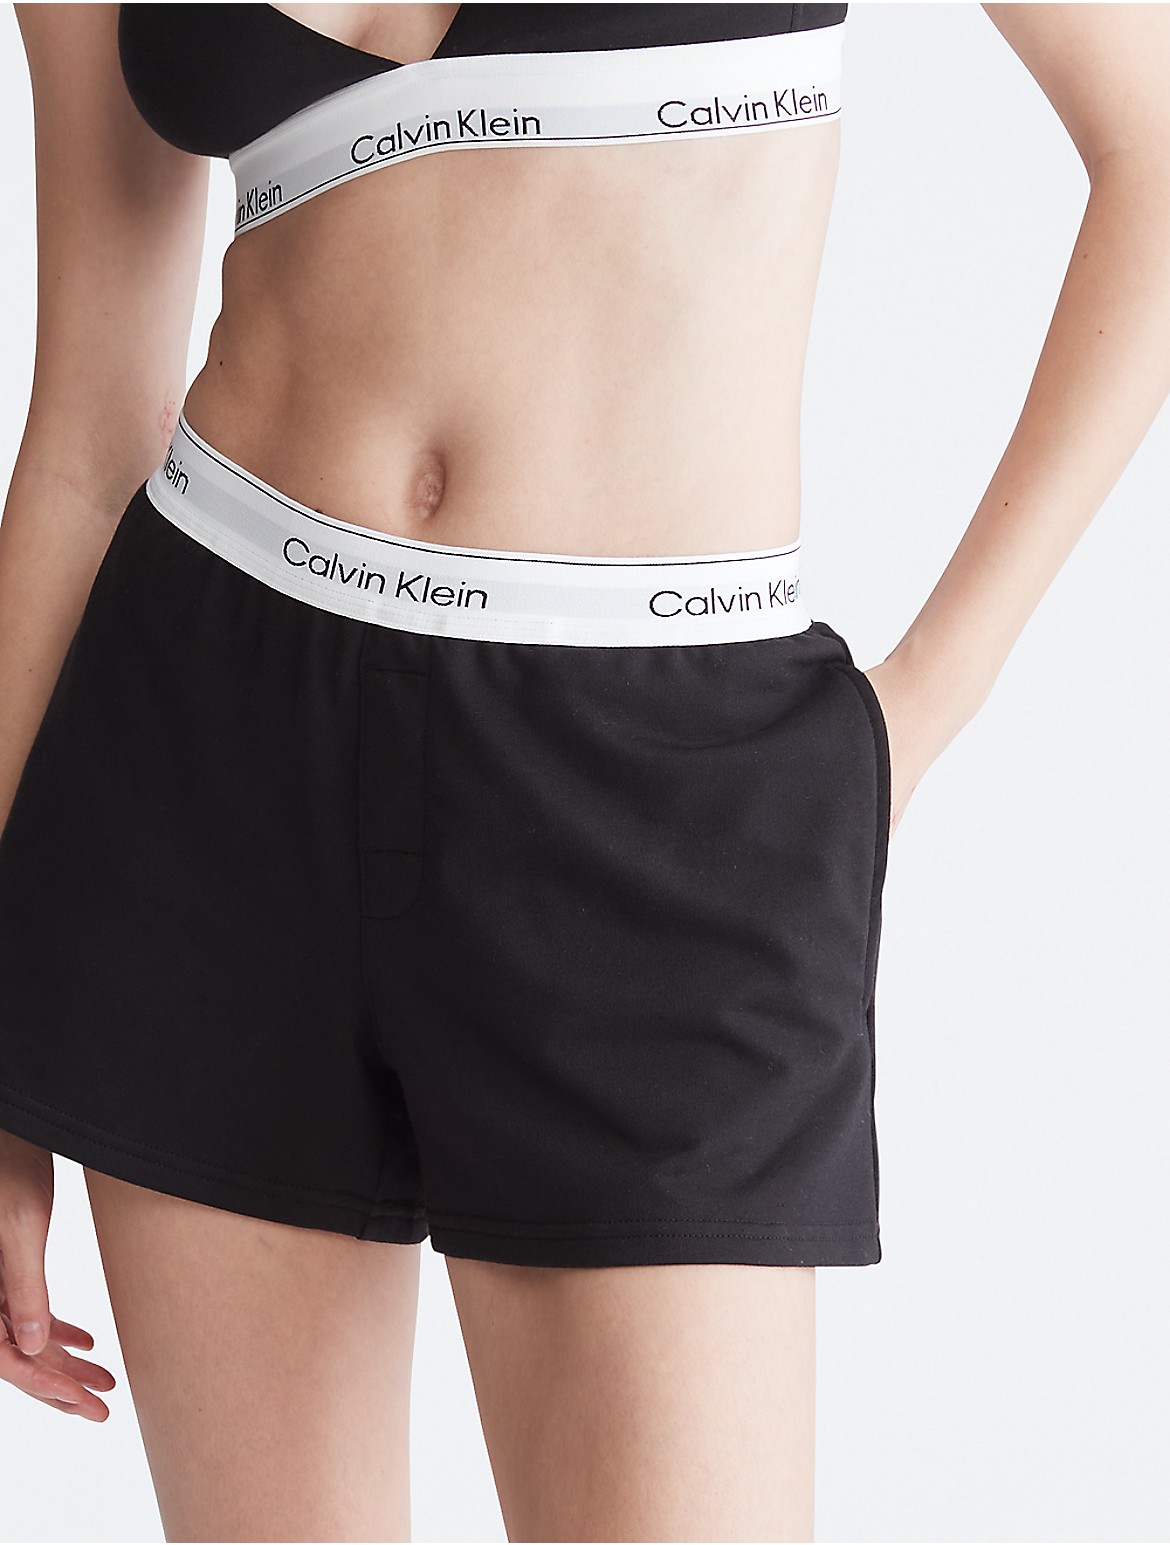 Calvin Klein Women's Modern Cotton Lounge Sleep Shorts - Black - S